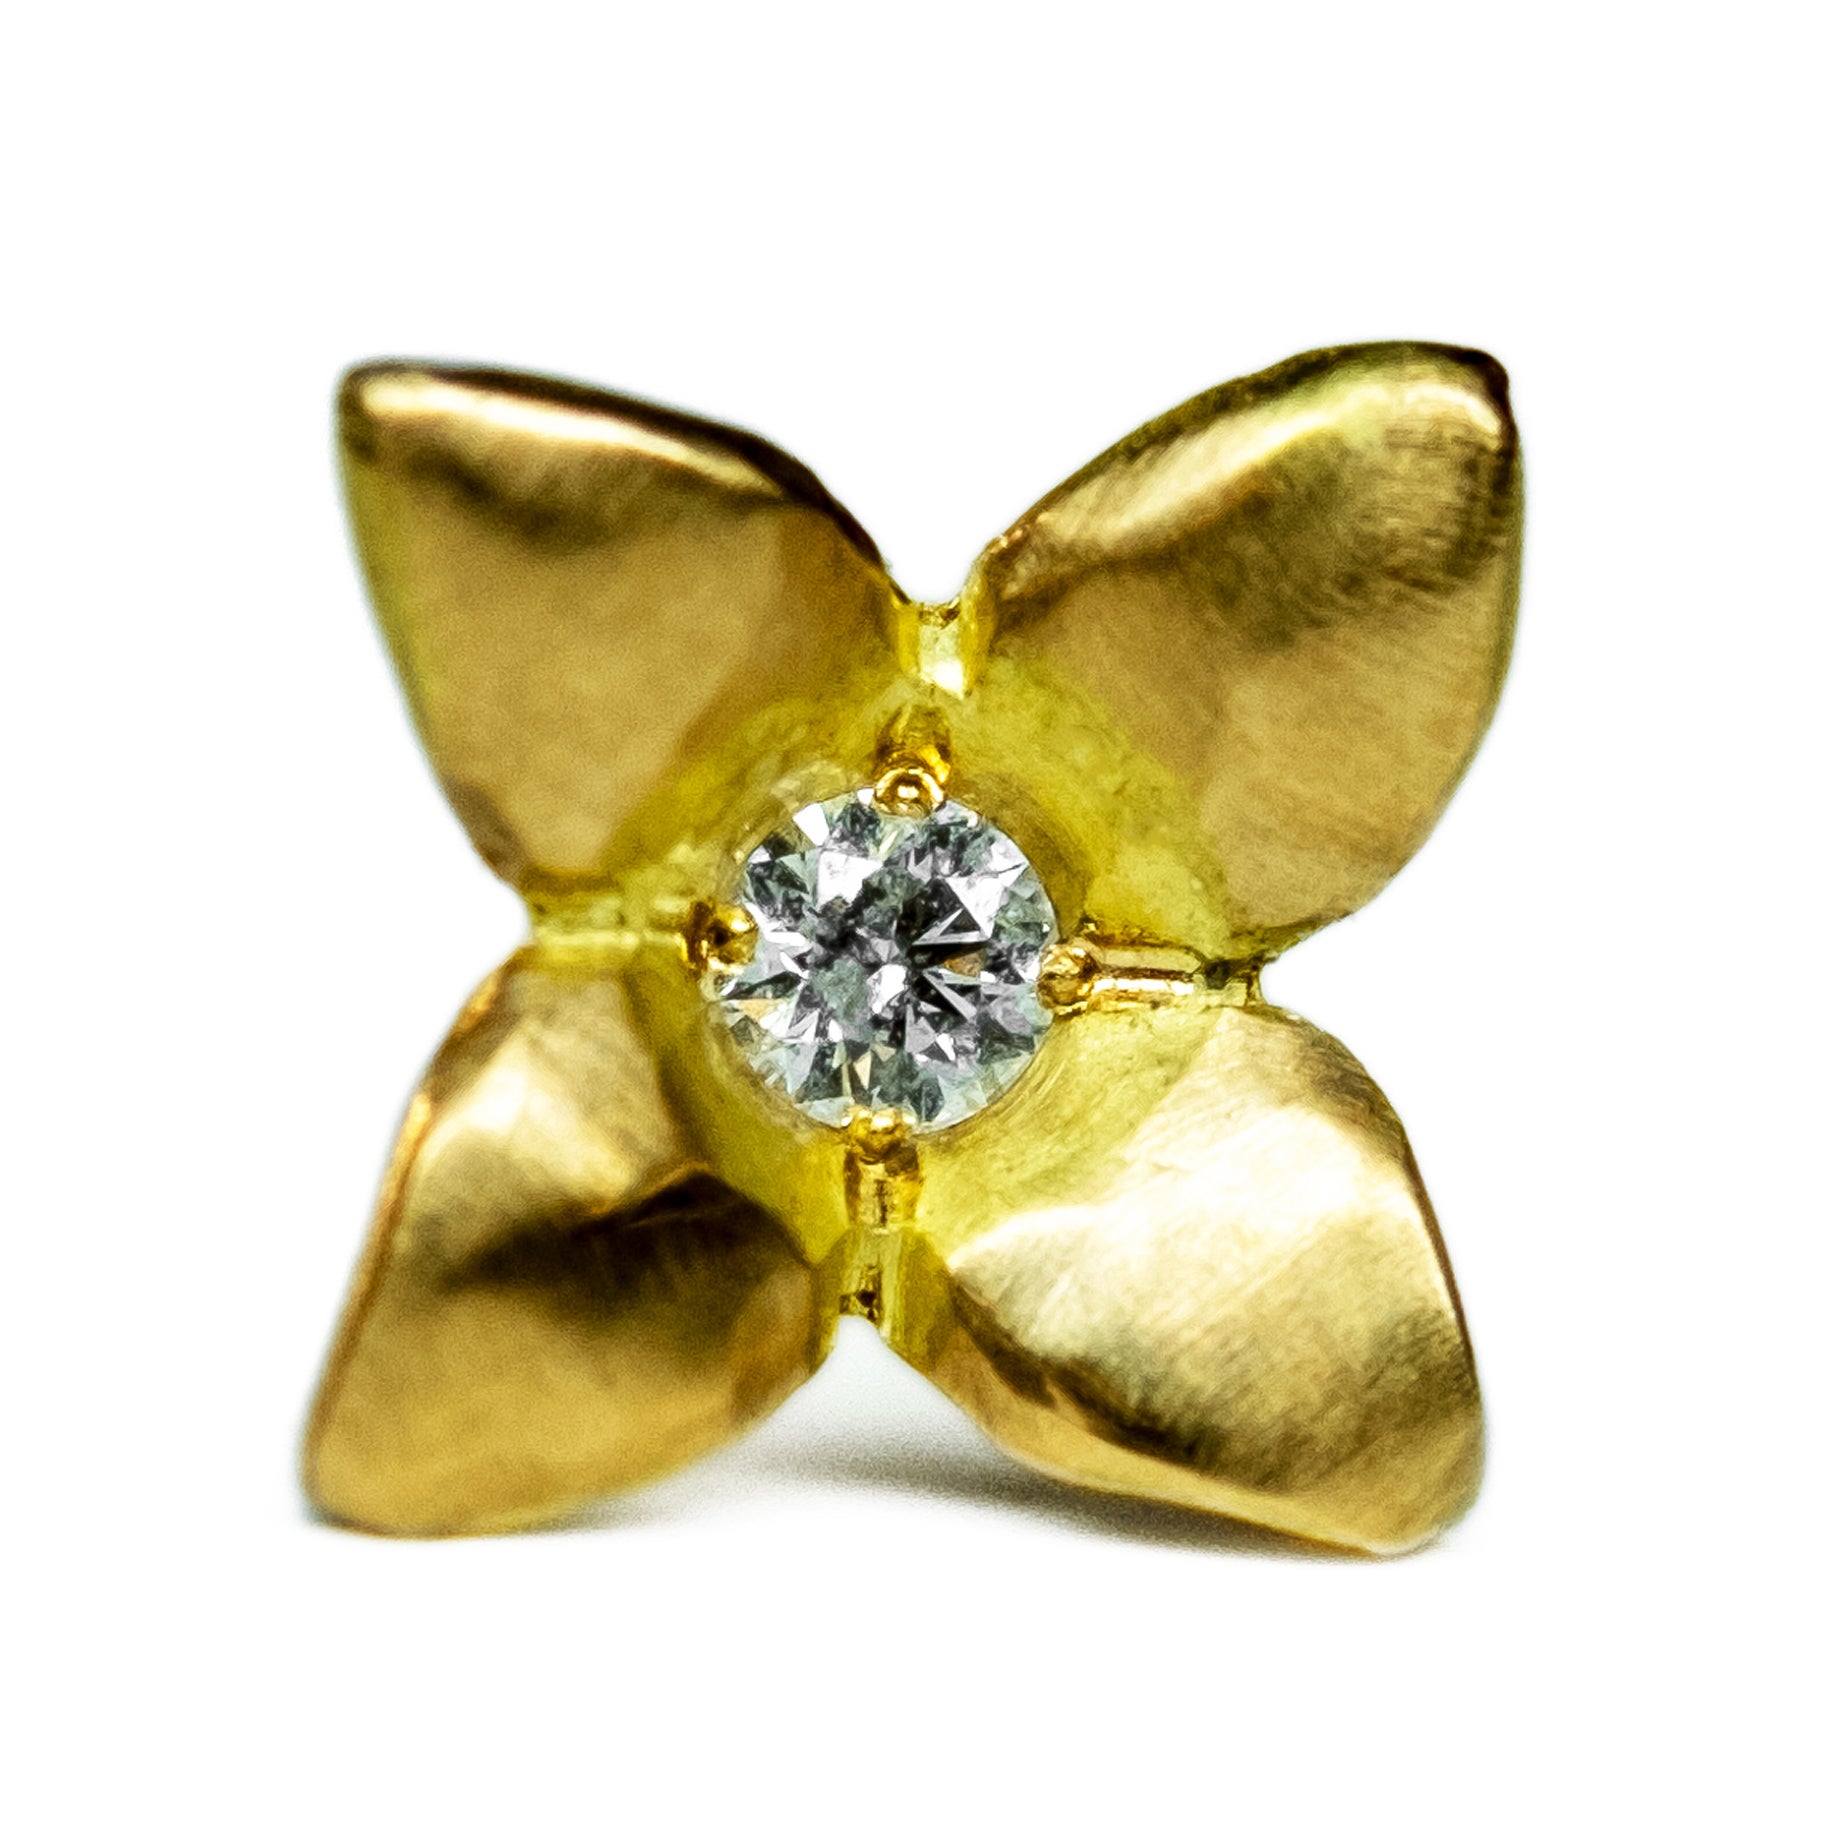 18K Yellow Fairmined Gold, Canadamark Diamonds, Handmade, Flower Piercing #10